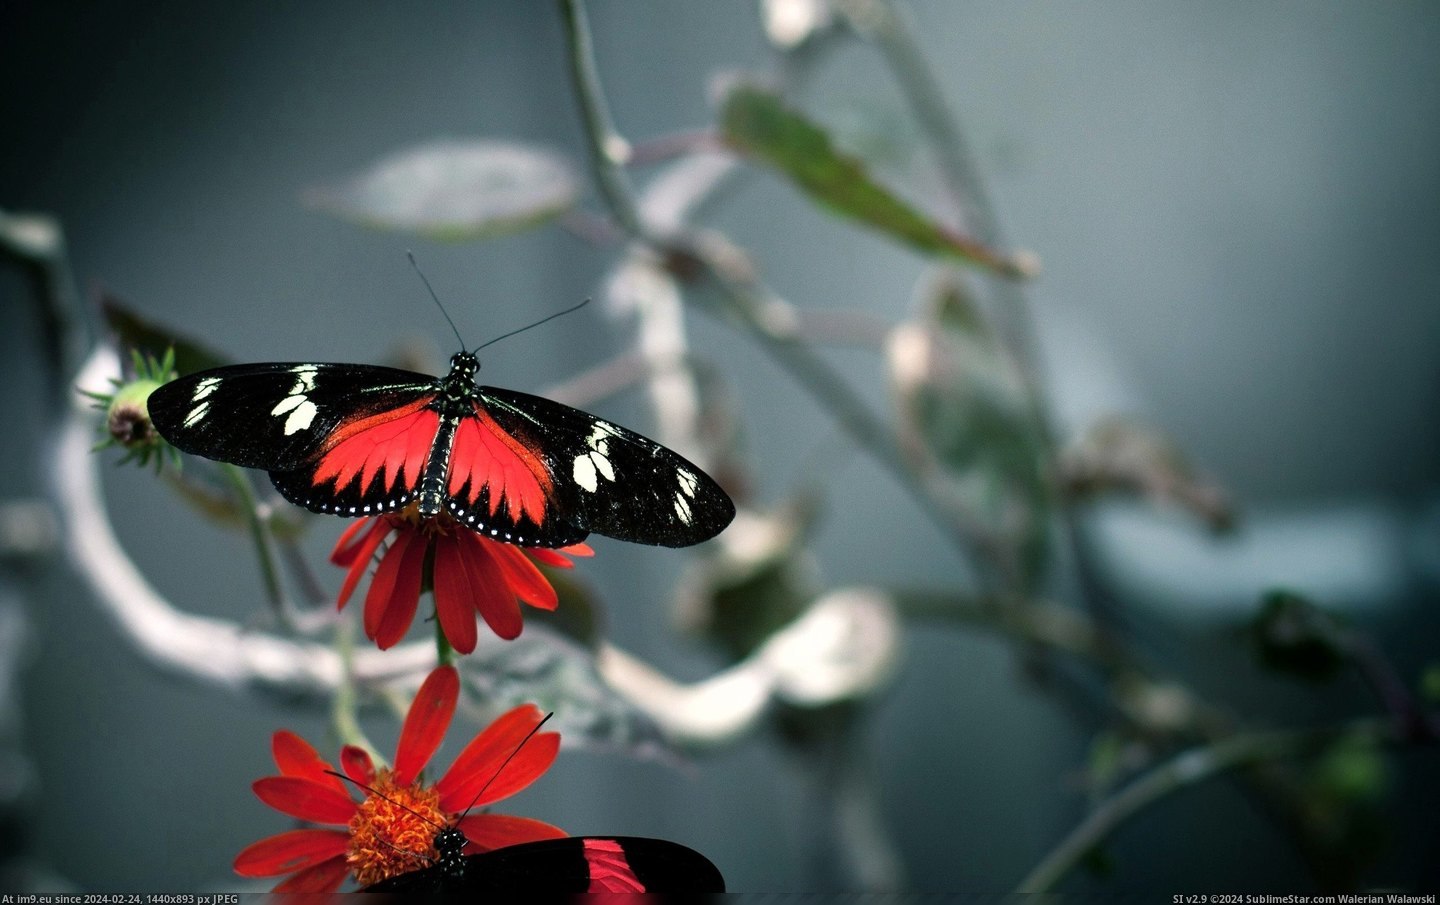 #Wallpaper #Butterfly #Wide Butterfly Wide HD Wallpaper Pic. (Bild von album Unique HD Wallpapers))